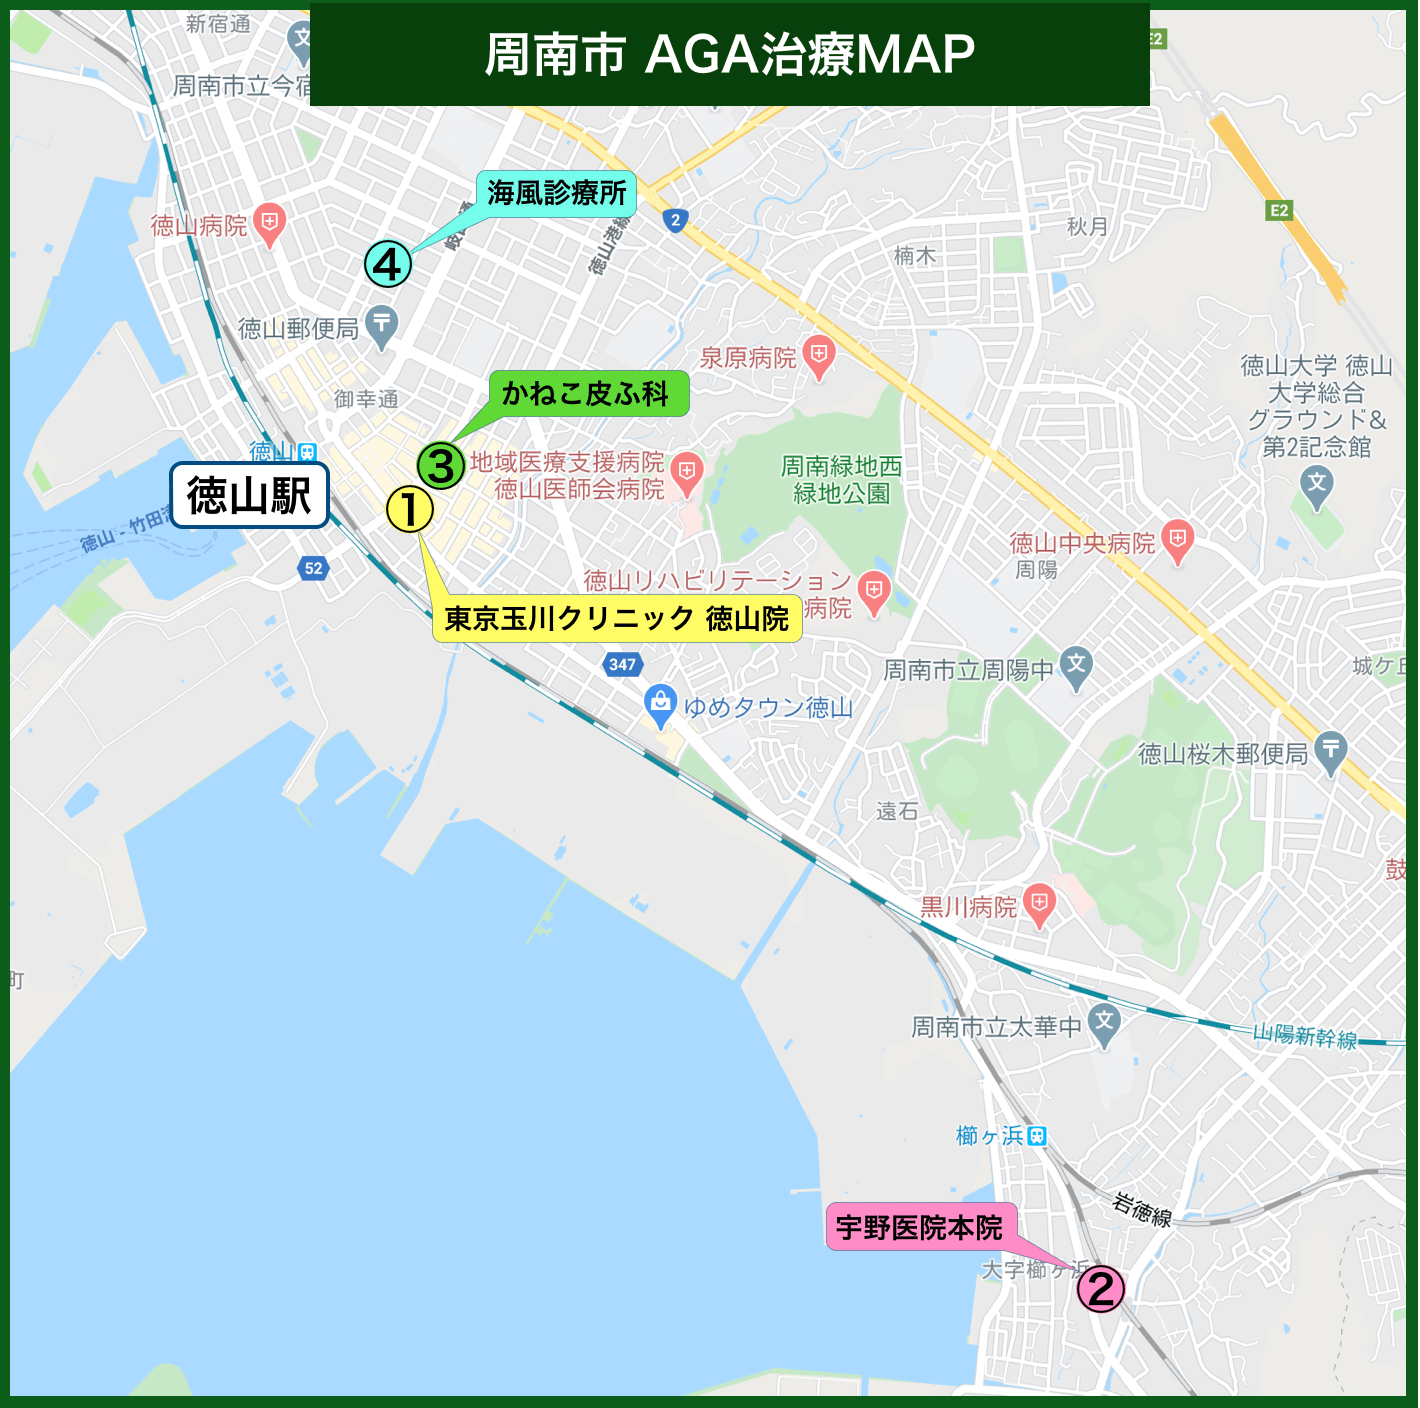 周南市 AGA治療MAP